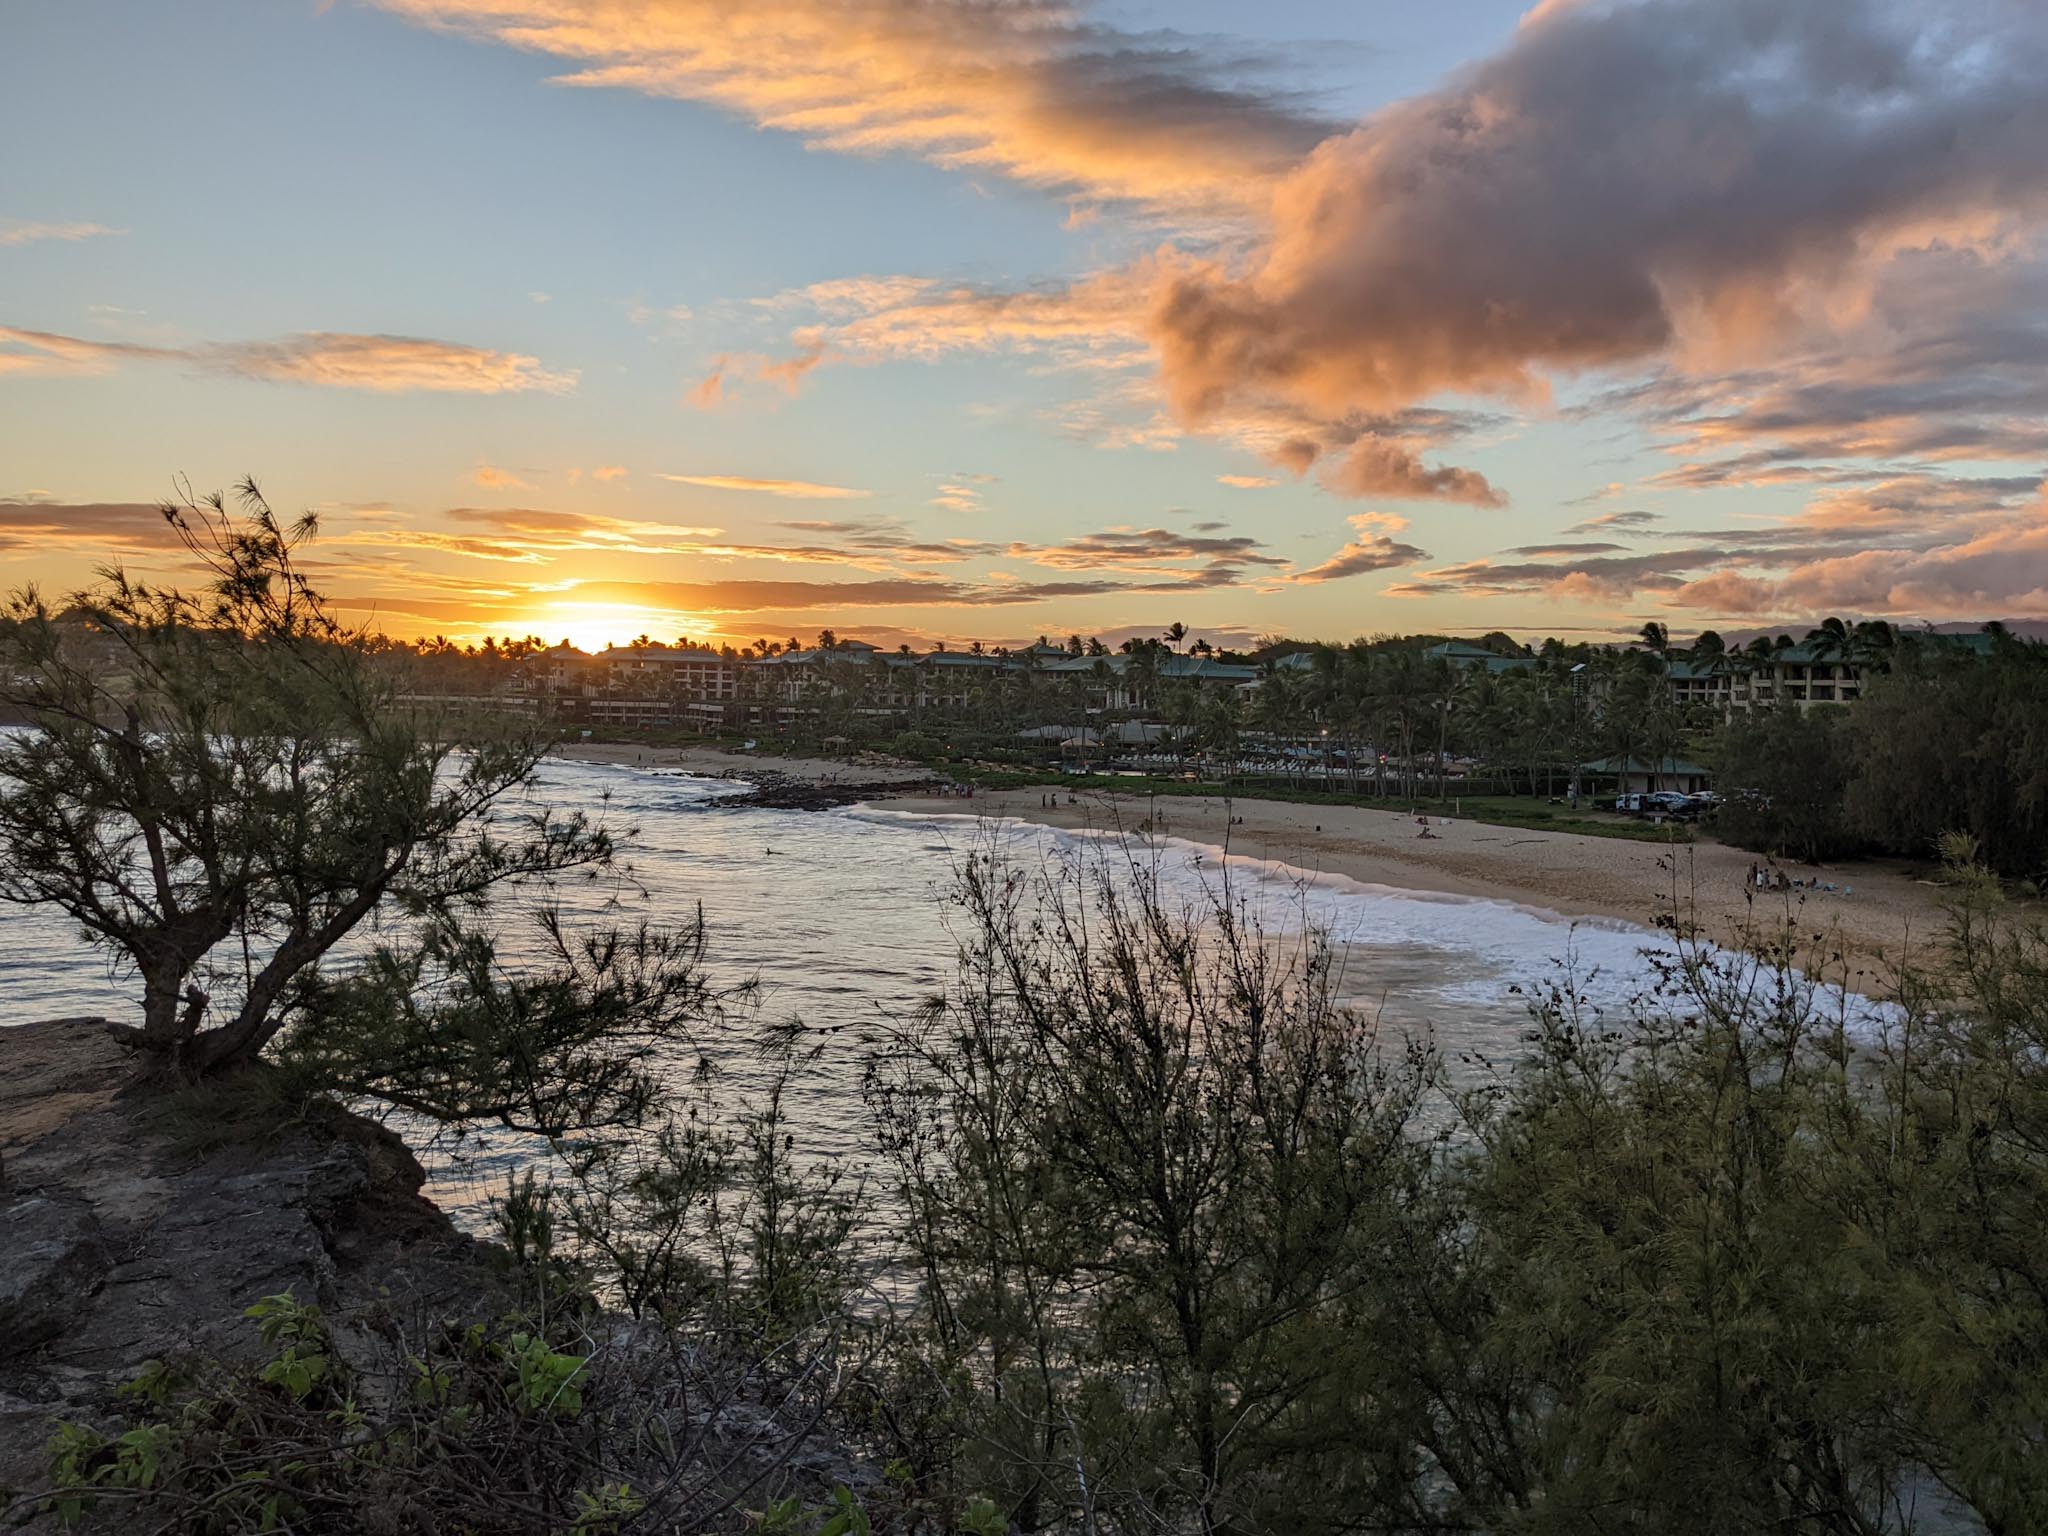 A sunset over the Grand Hyatt Kauai.